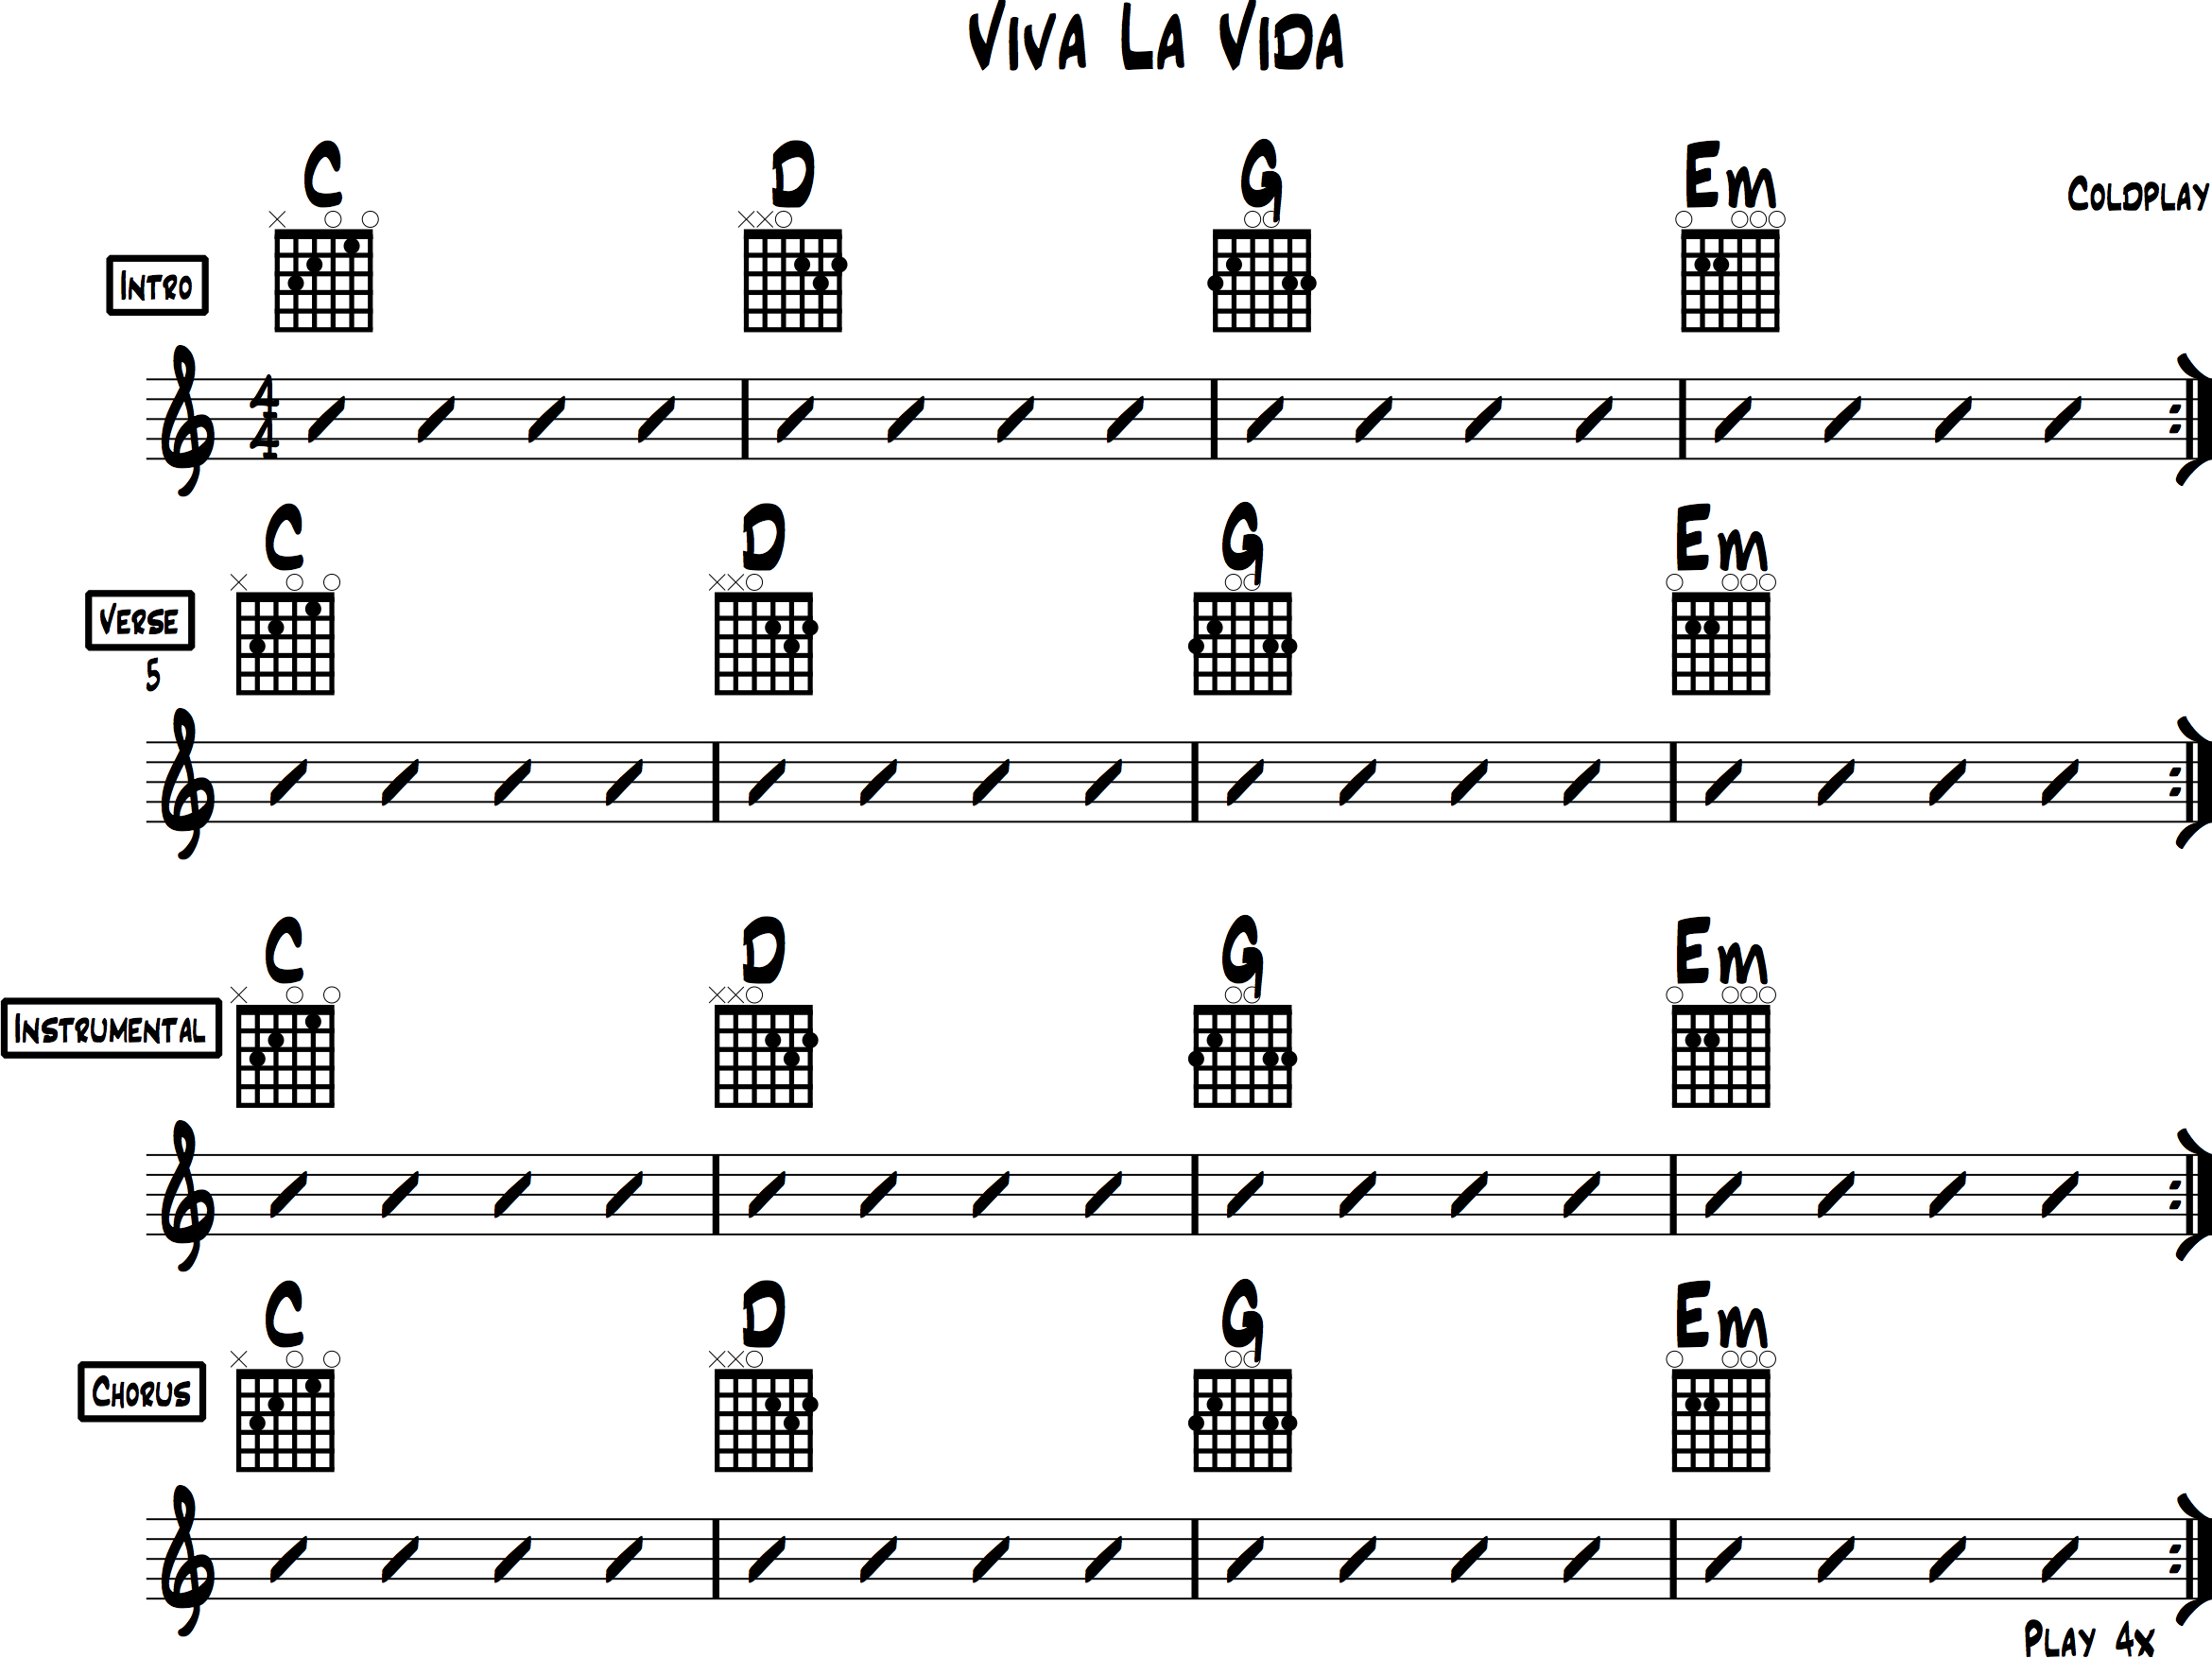 Viva la Vida chord chart for guitar